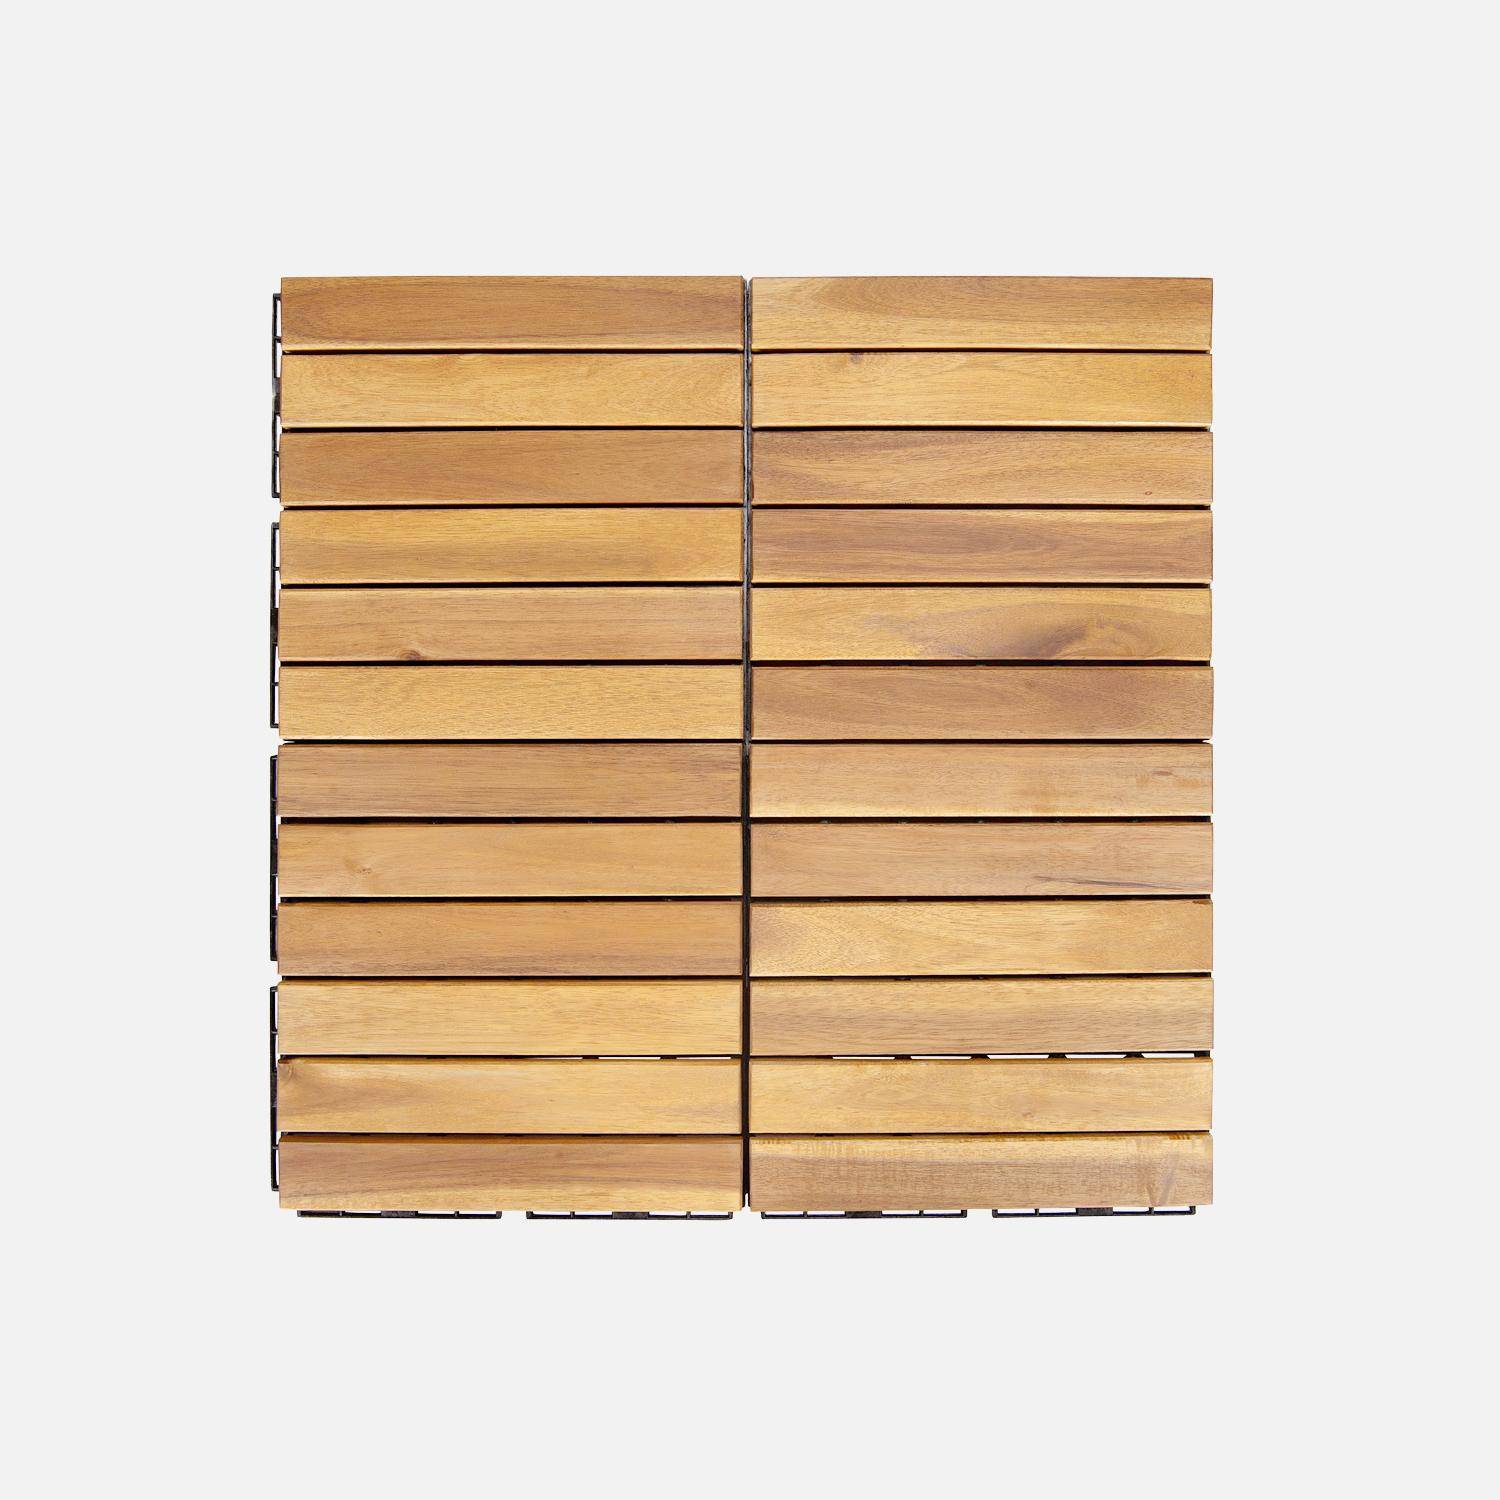 Pack of 10 acacia wood decking slabs 30x30cm, linear pattern, slats, clip-on,sweeek,Photo4